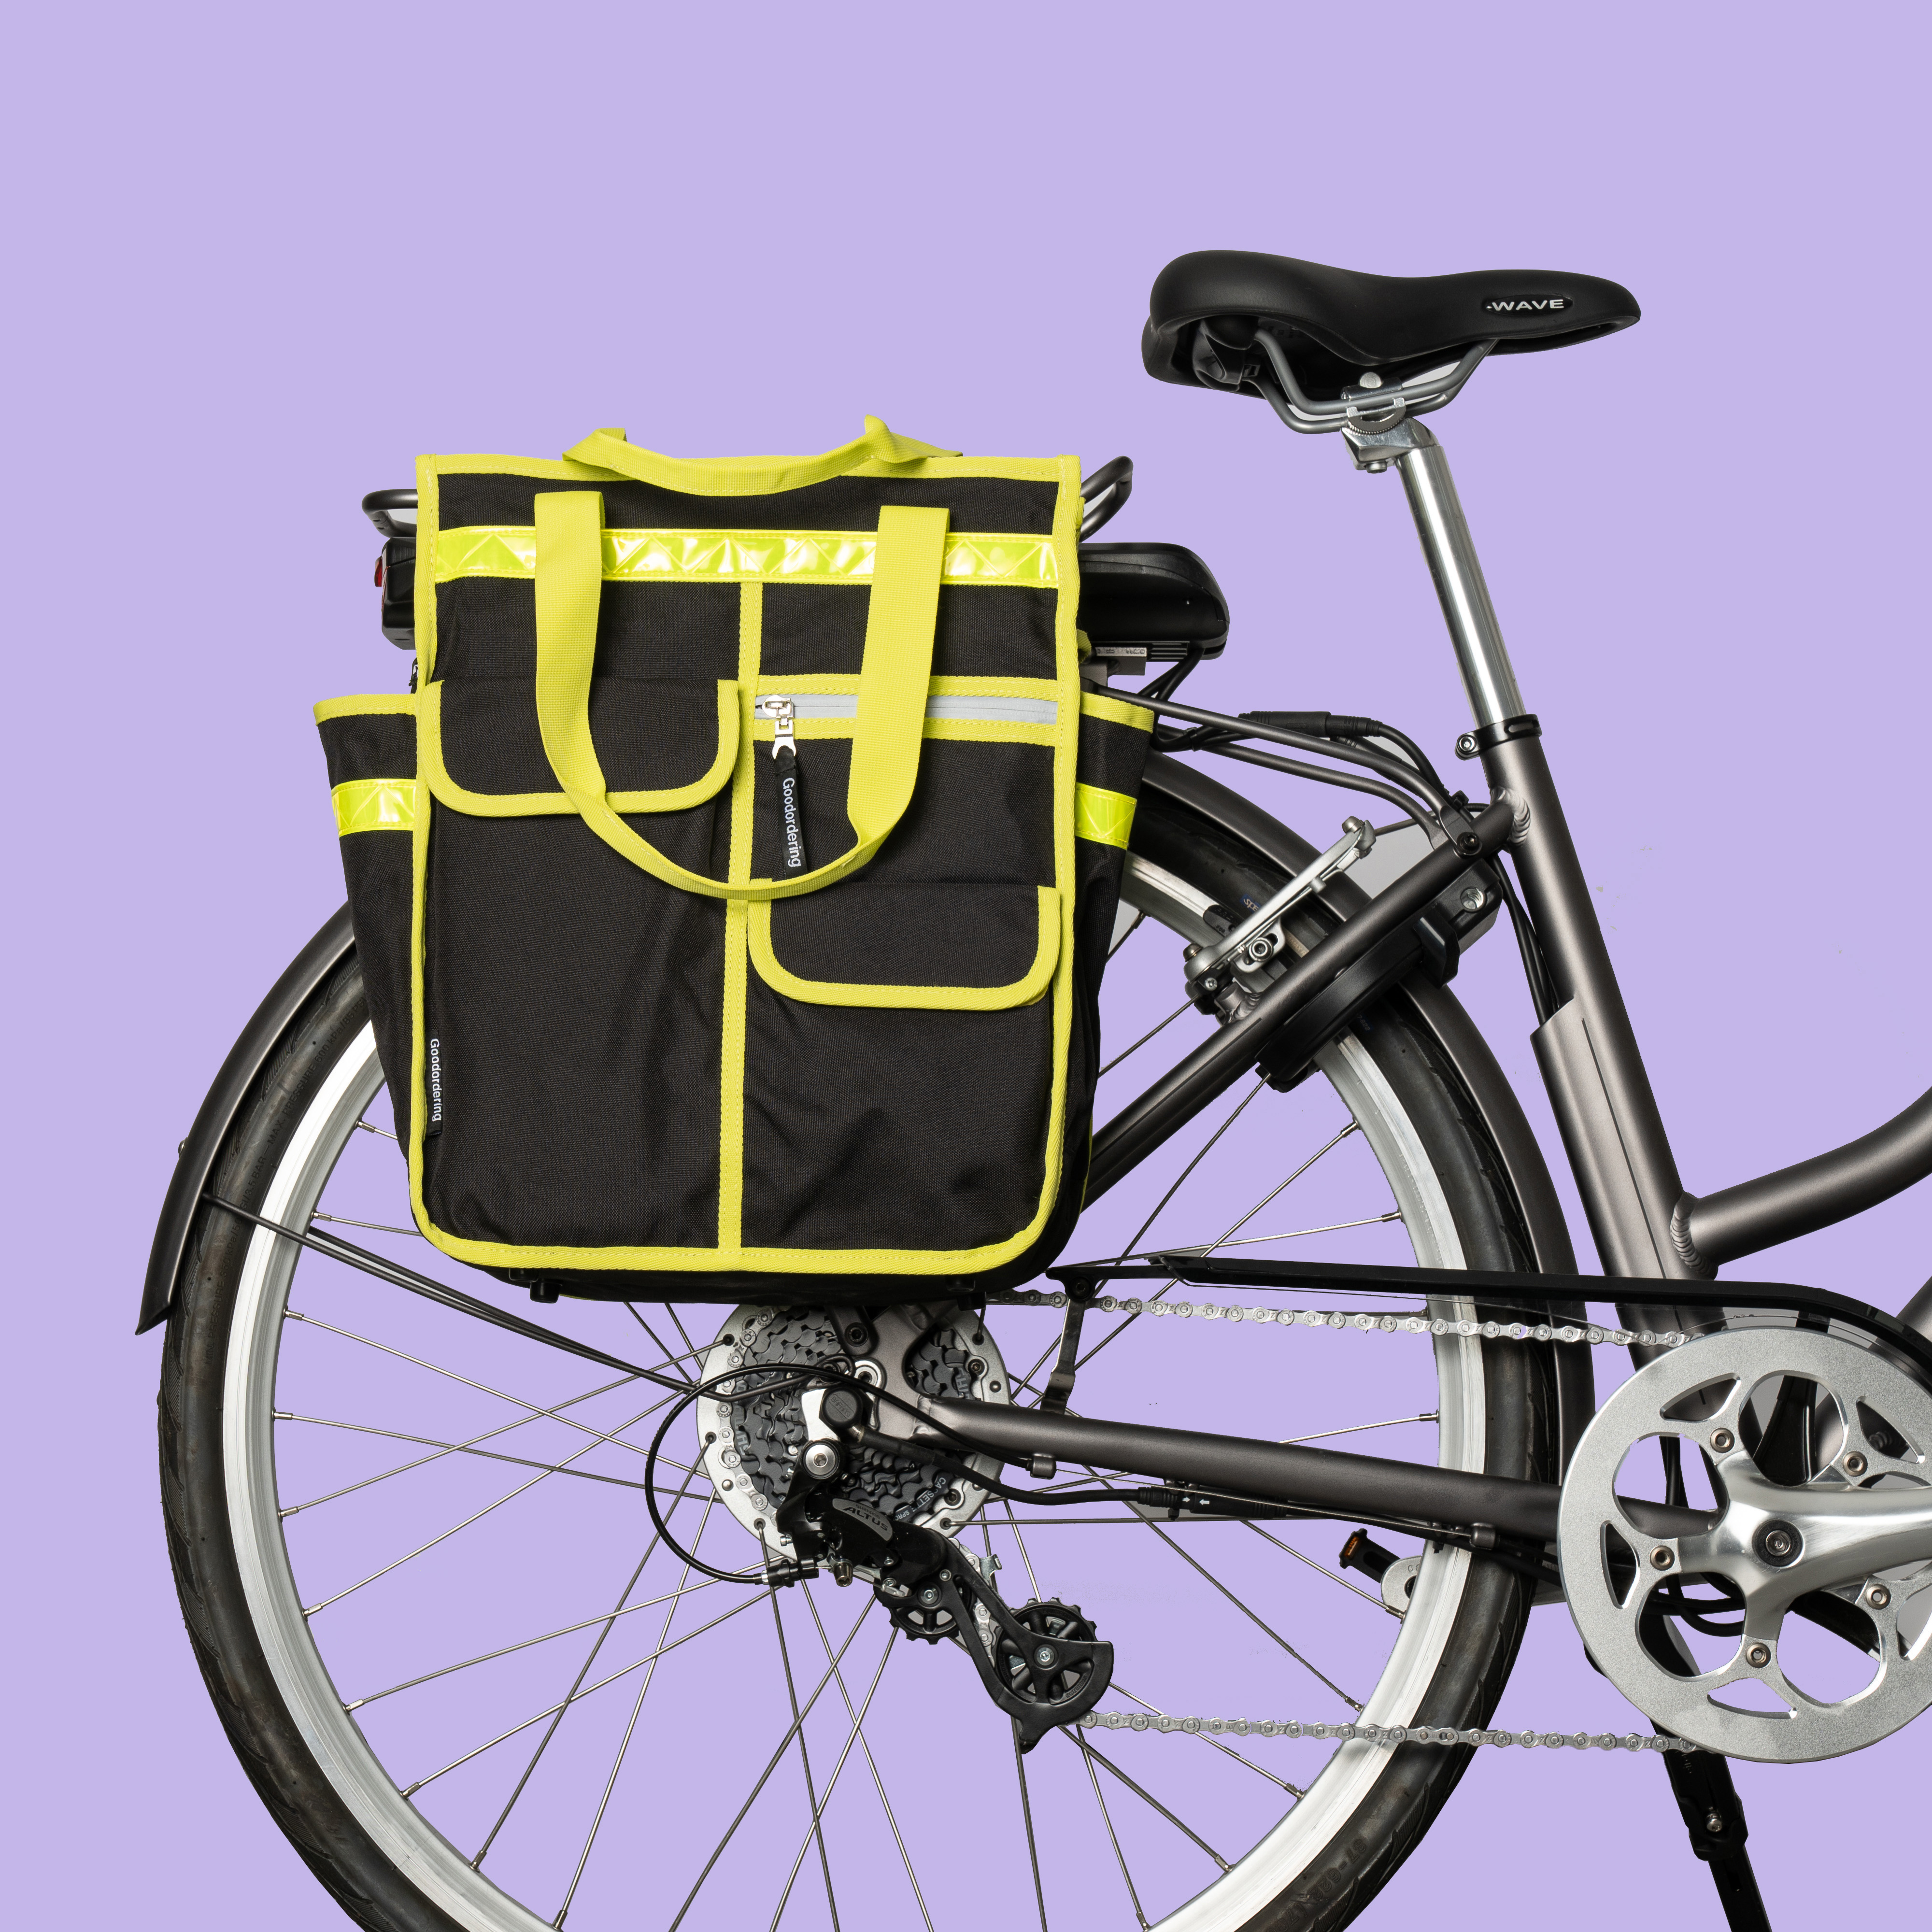 Goodordering Neon yellow & black shopper bicycle pannier bag